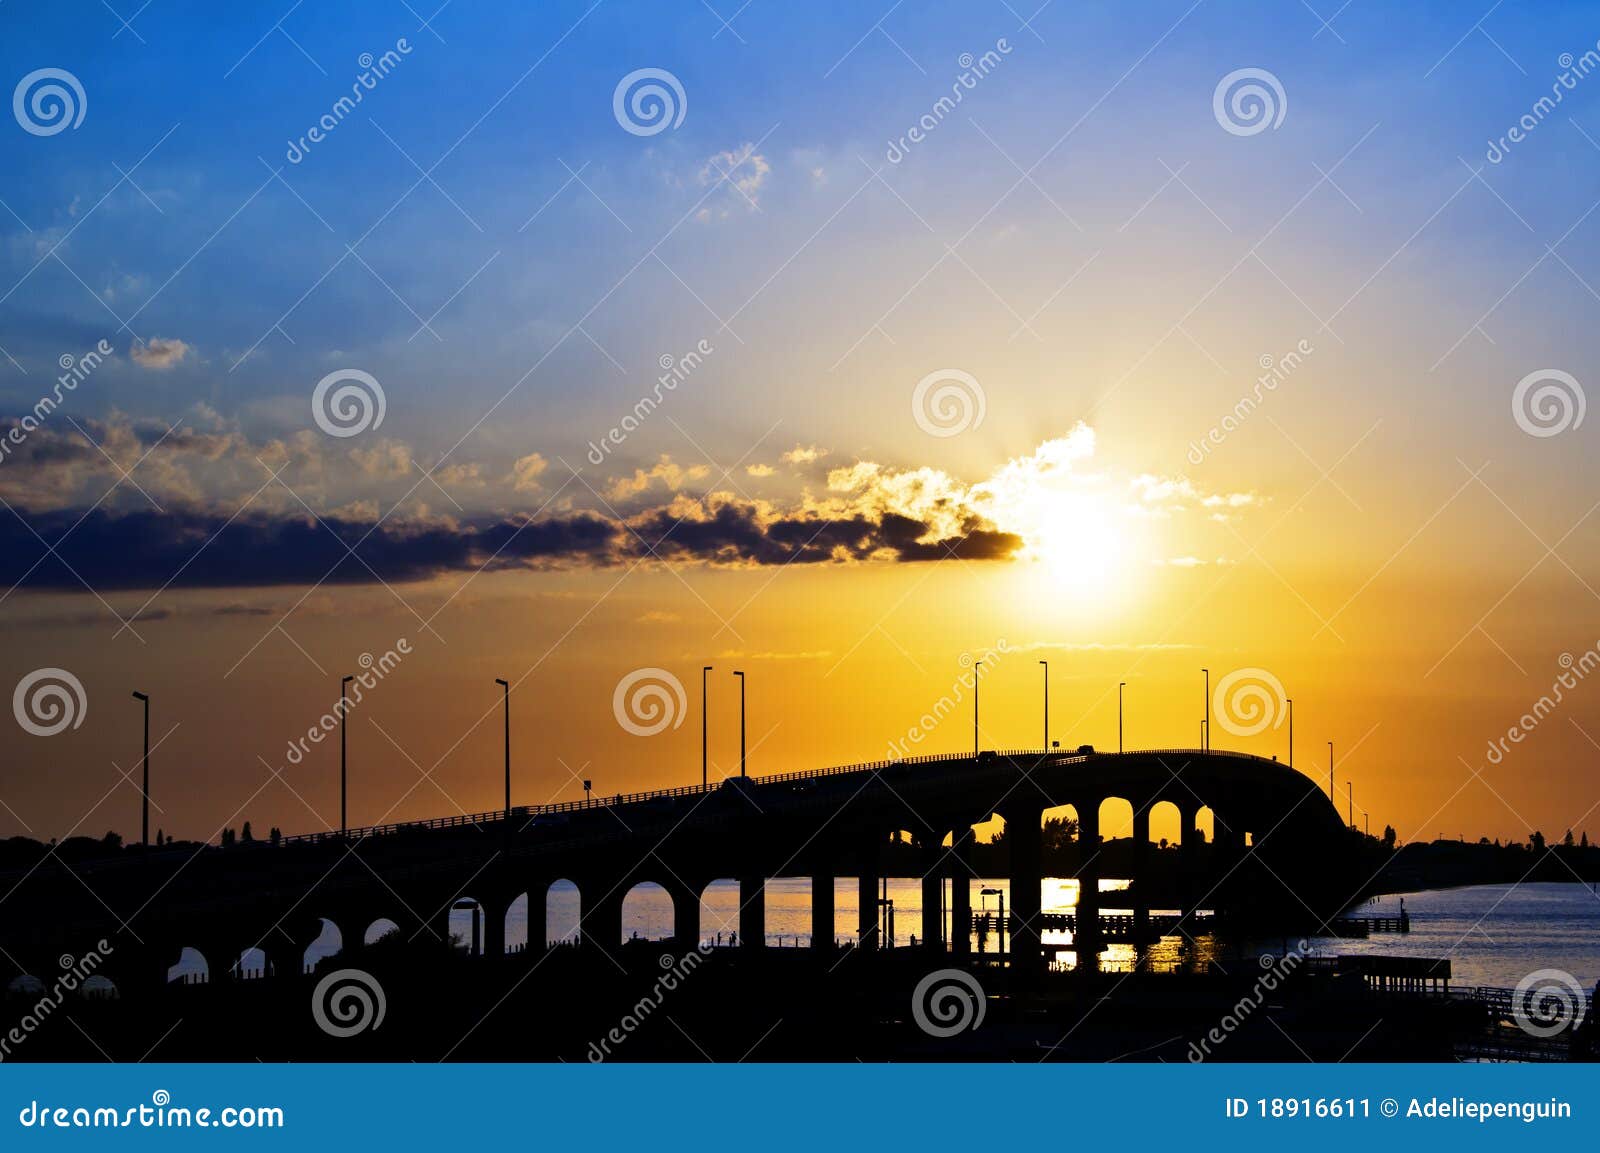 bridge at sunset, florida